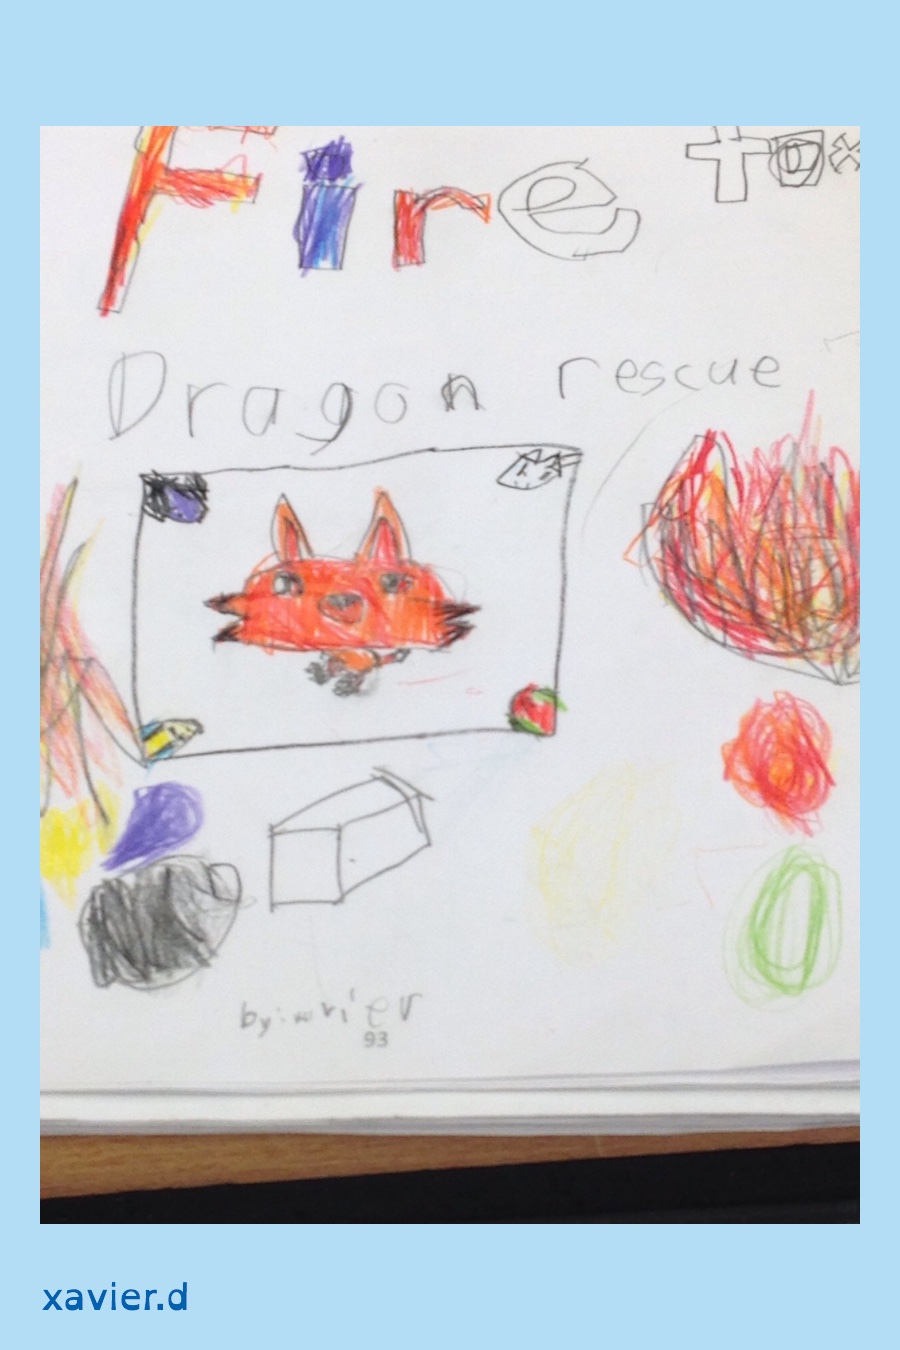 Firefox Dragon Rescue by Xavier D